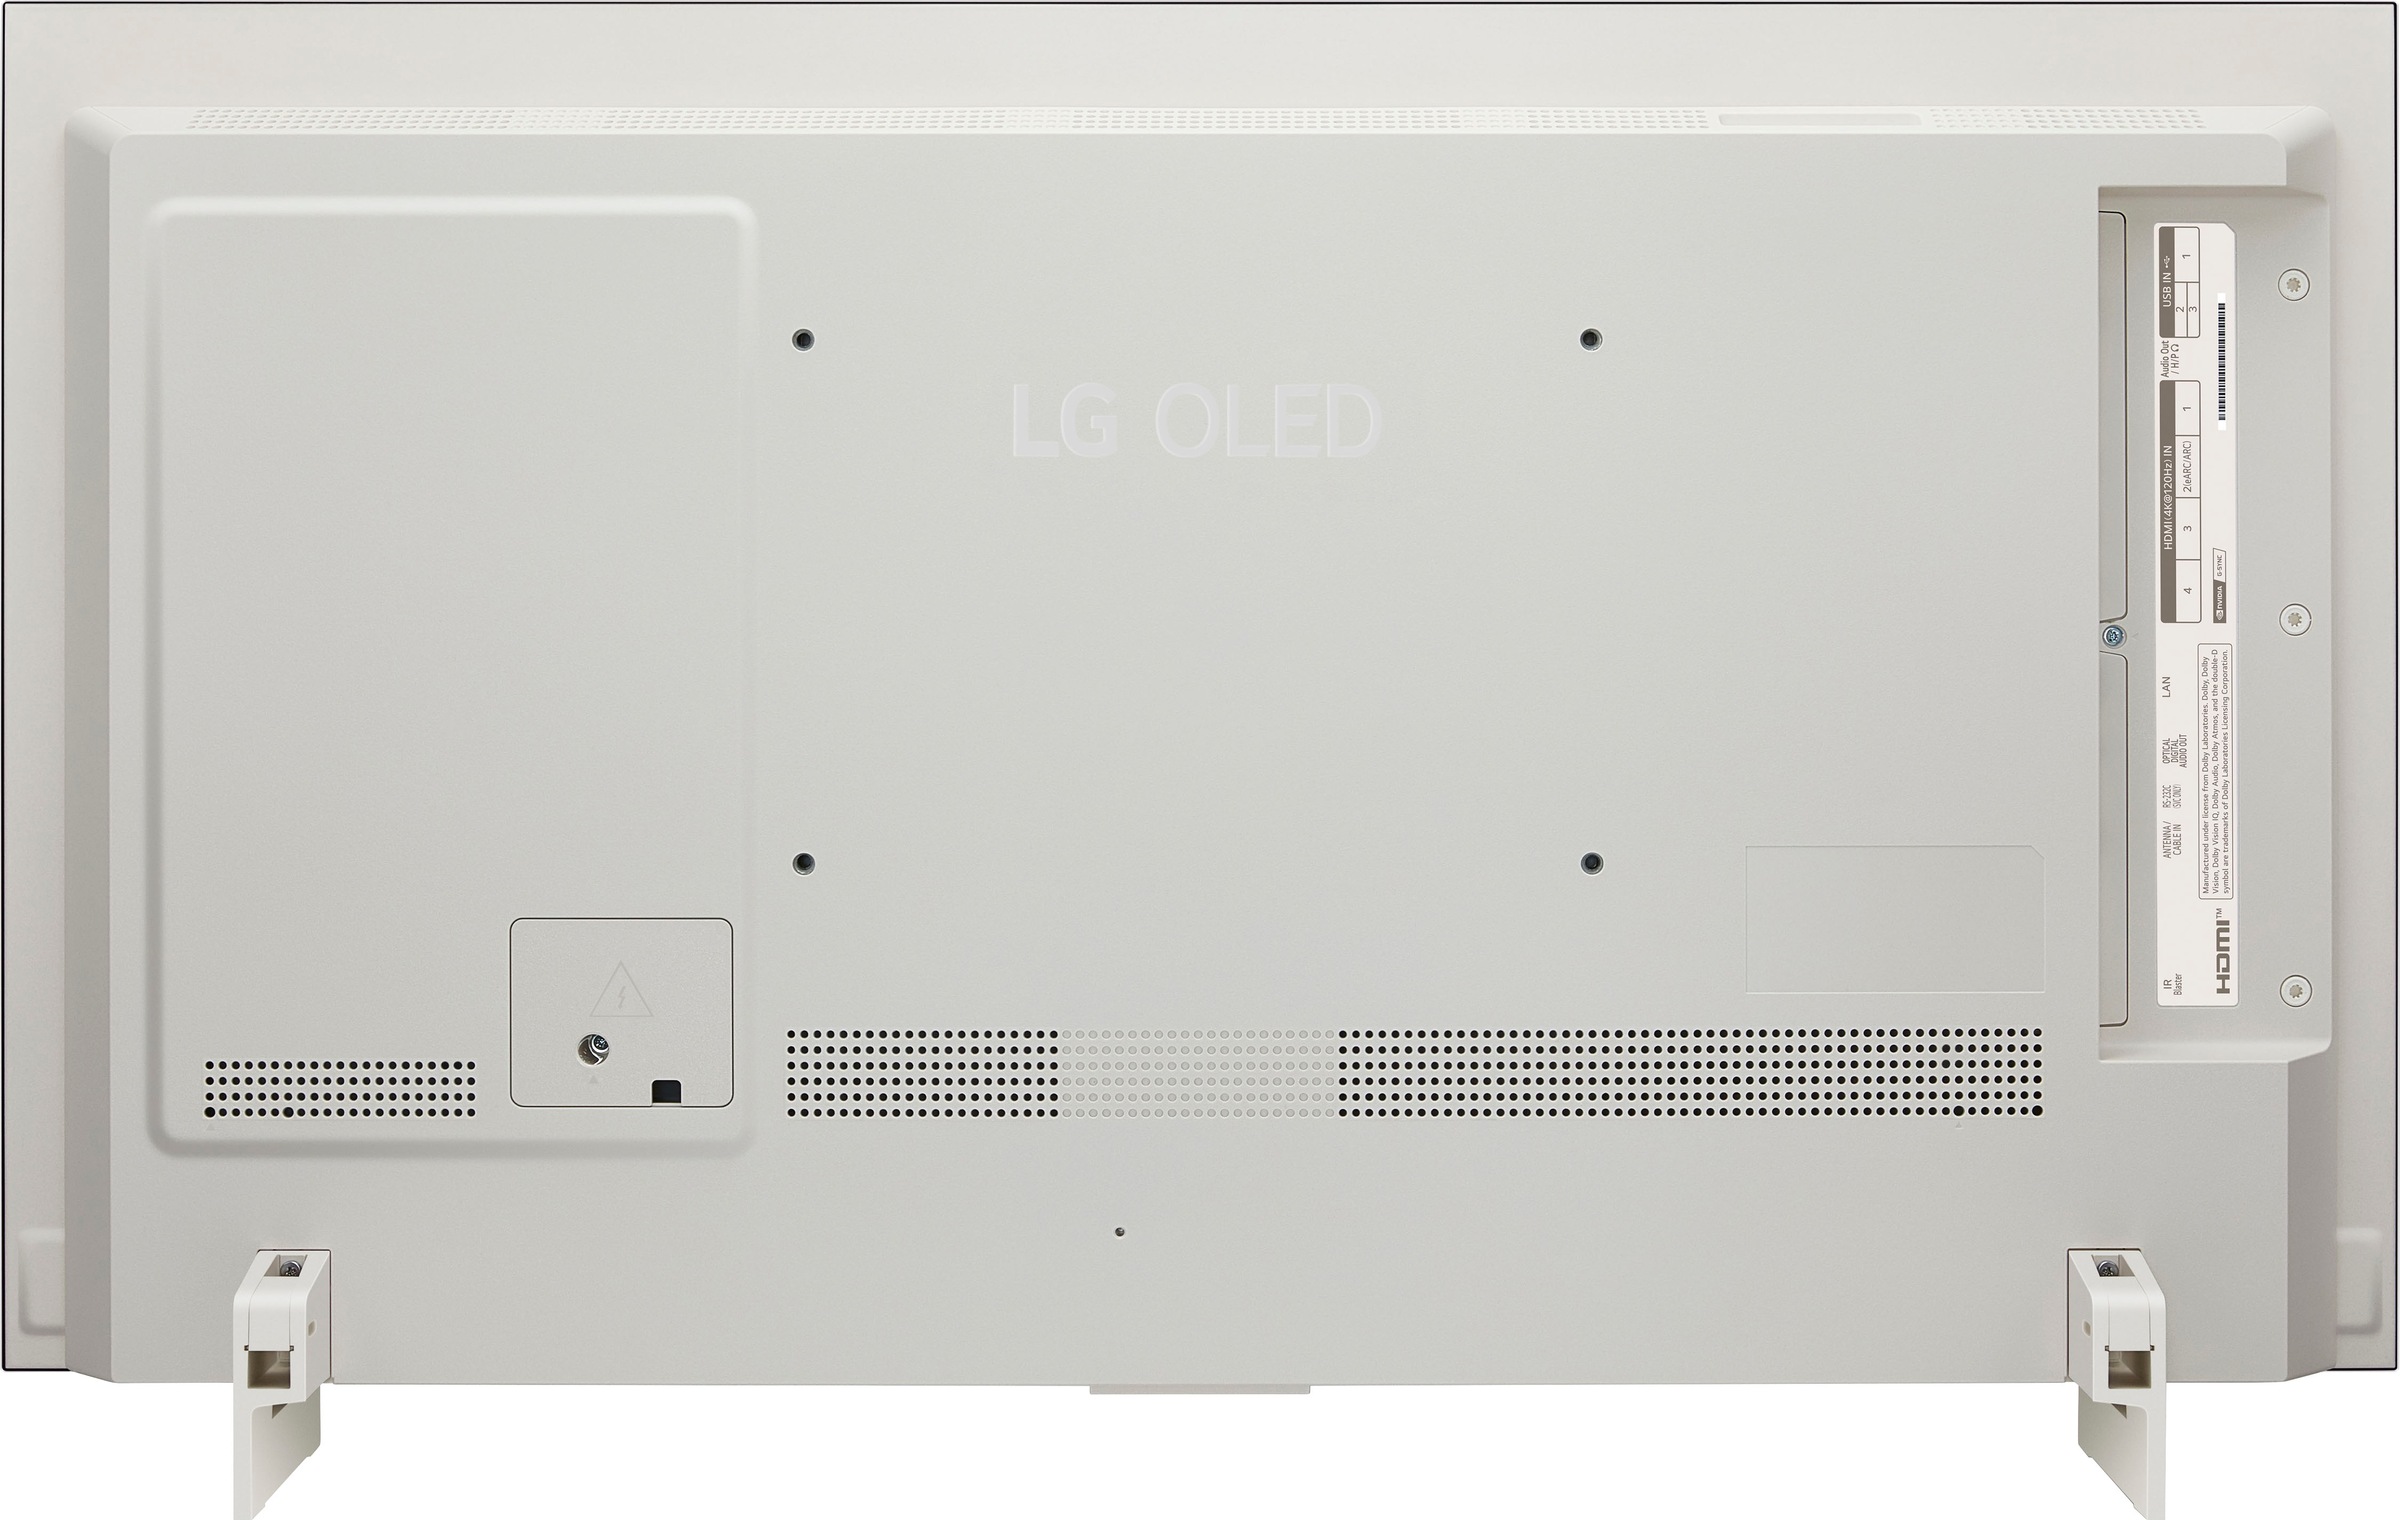 LG OLED-Fernseher, 106 cm/42 Zoll, 4K Ultra HD, Smart-TV